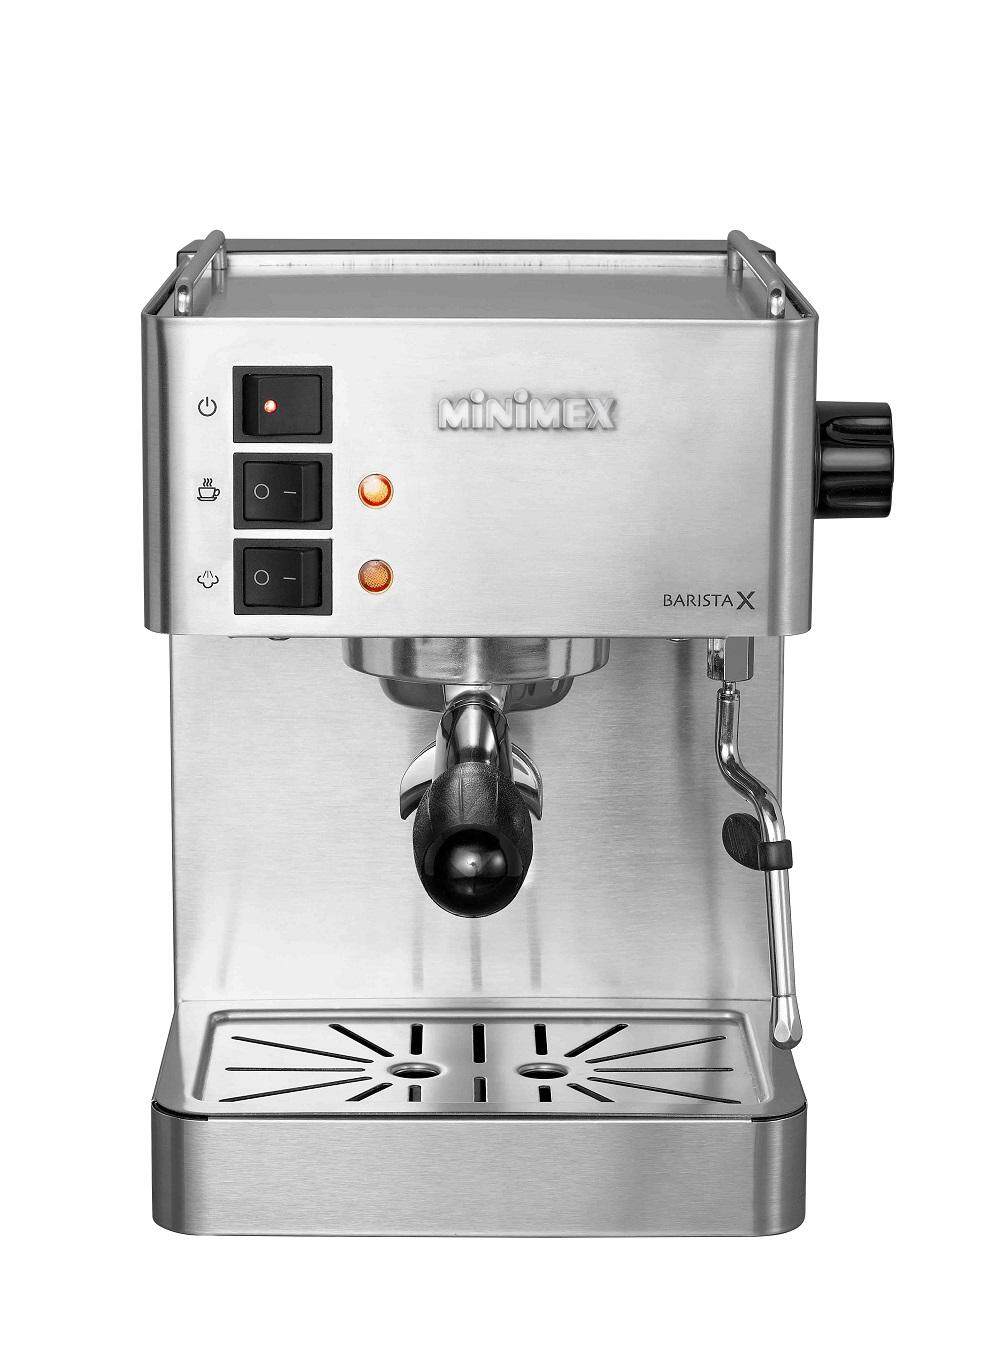 Minimex เครื่องชงกาแฟ รุ่น Barista X (Silver)